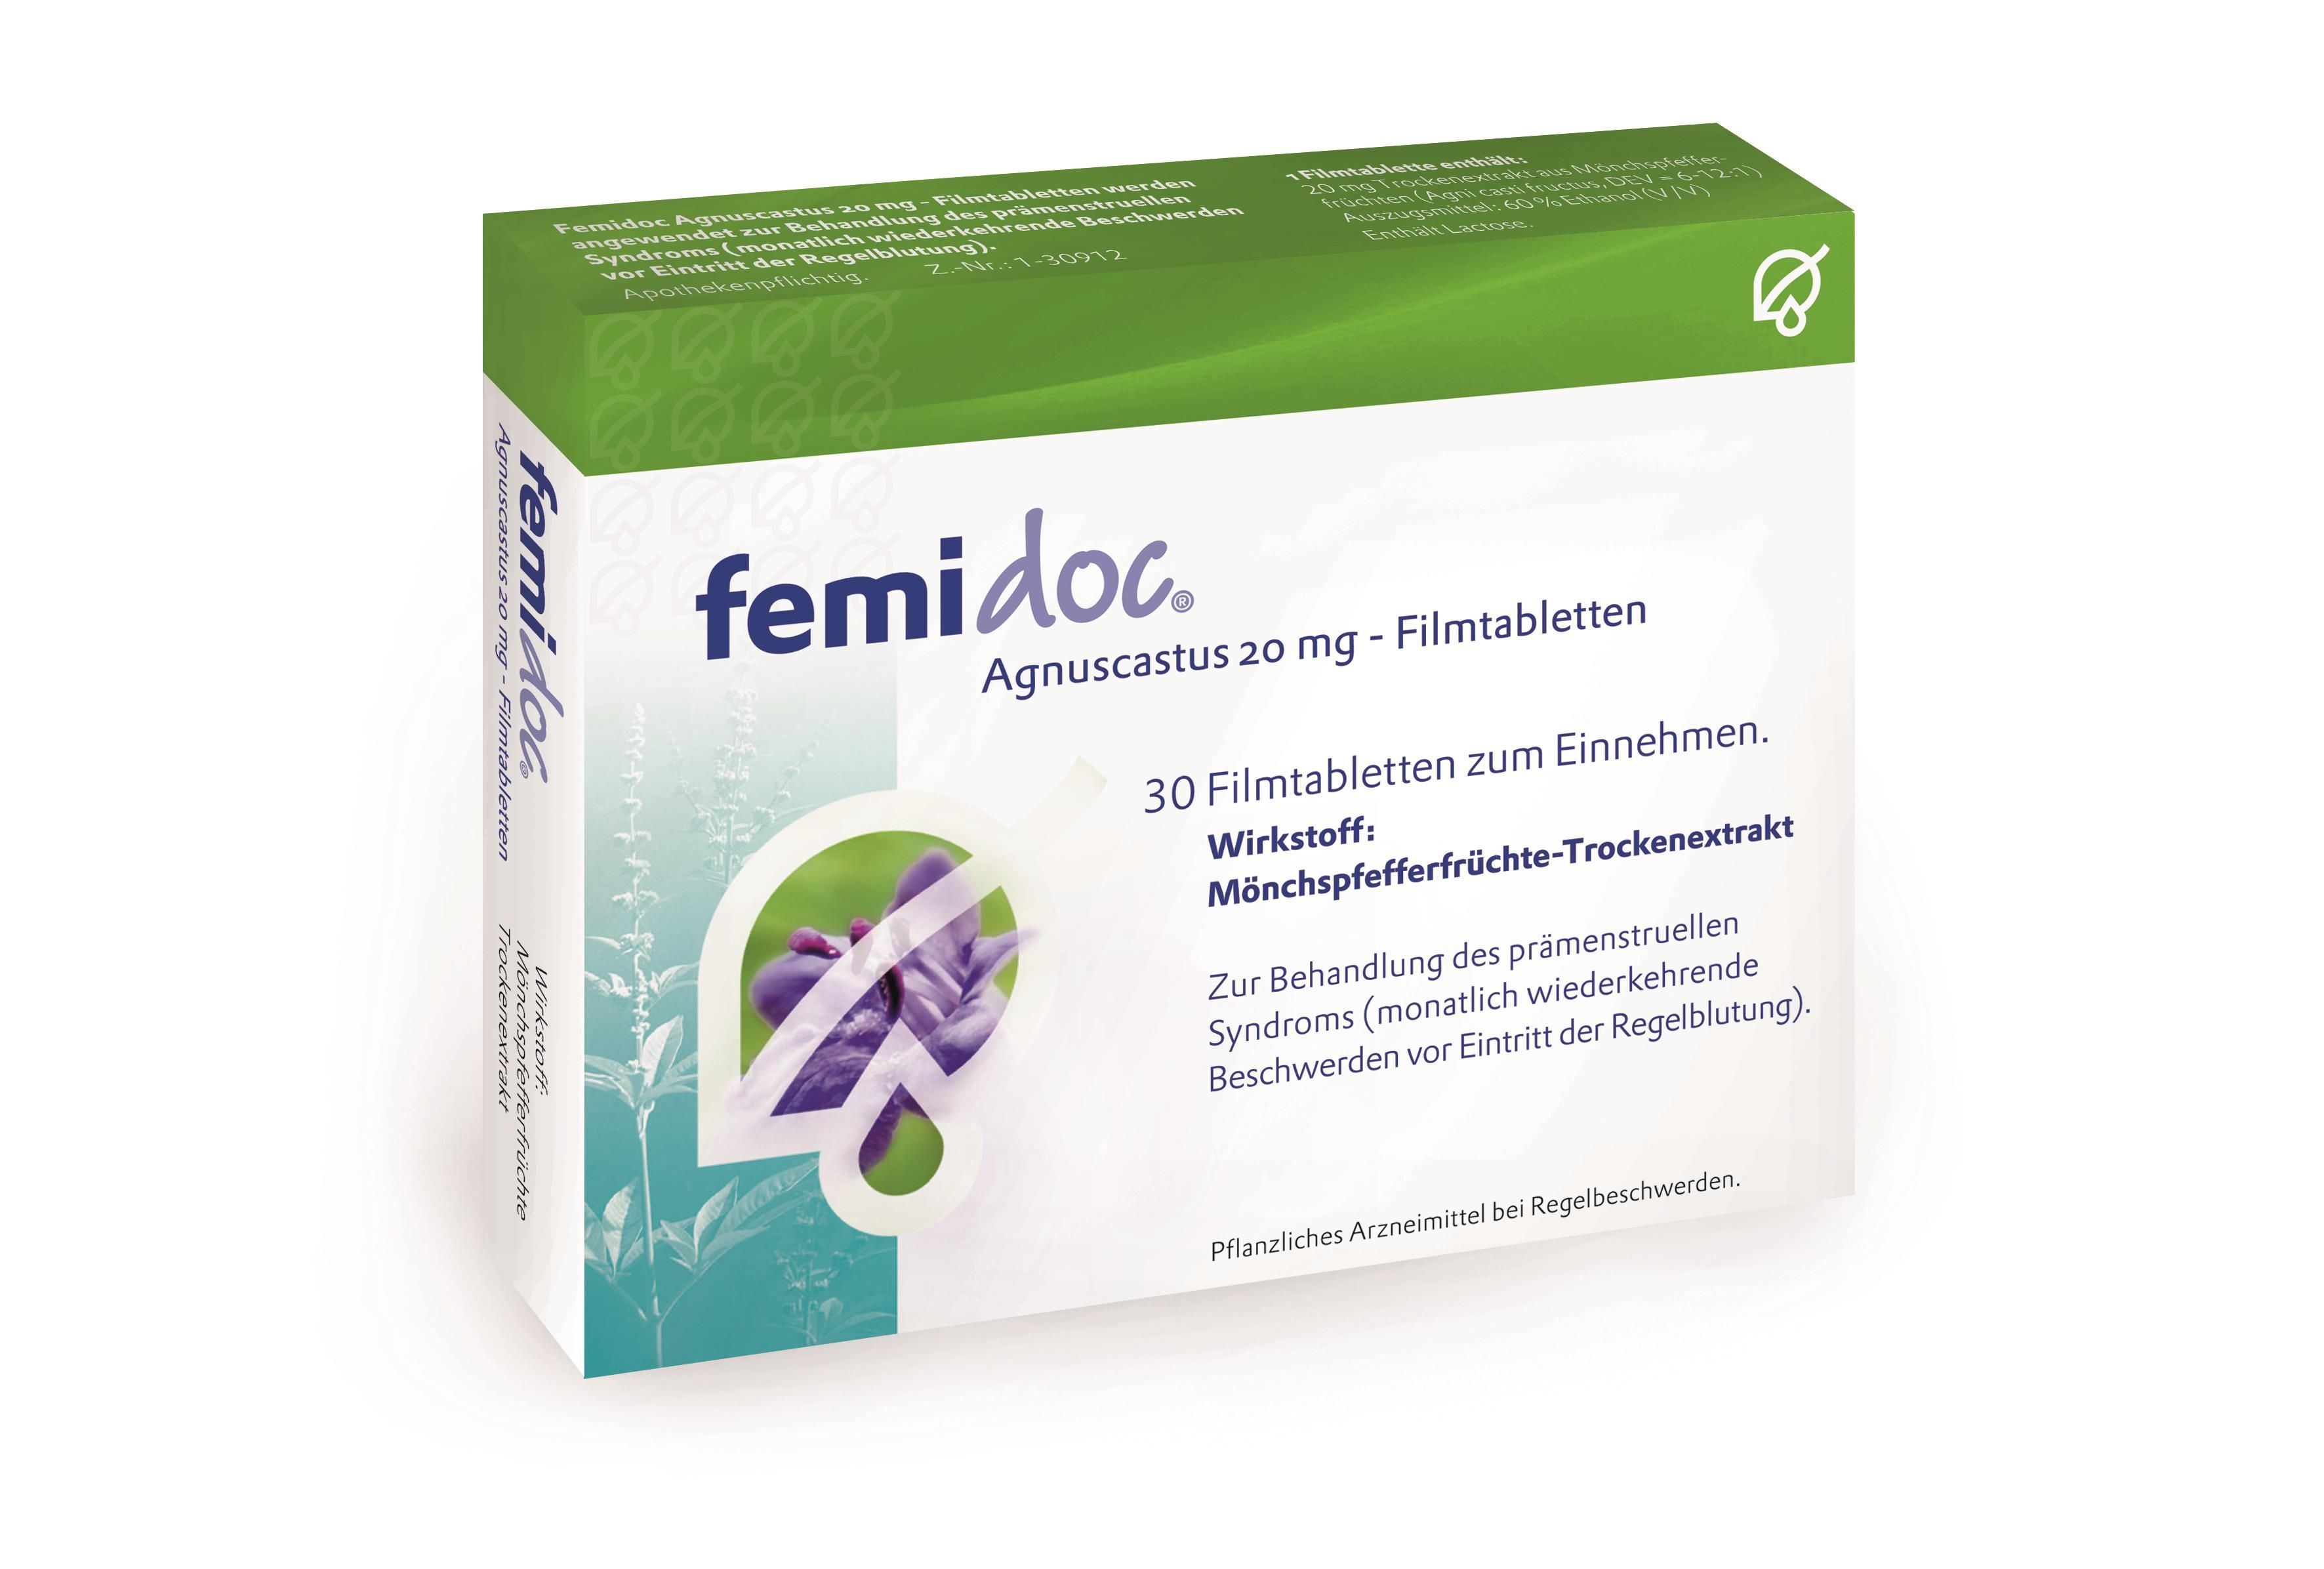 femidoc® AGNUSCASTUS 20 MG - FILMTABLETTEN